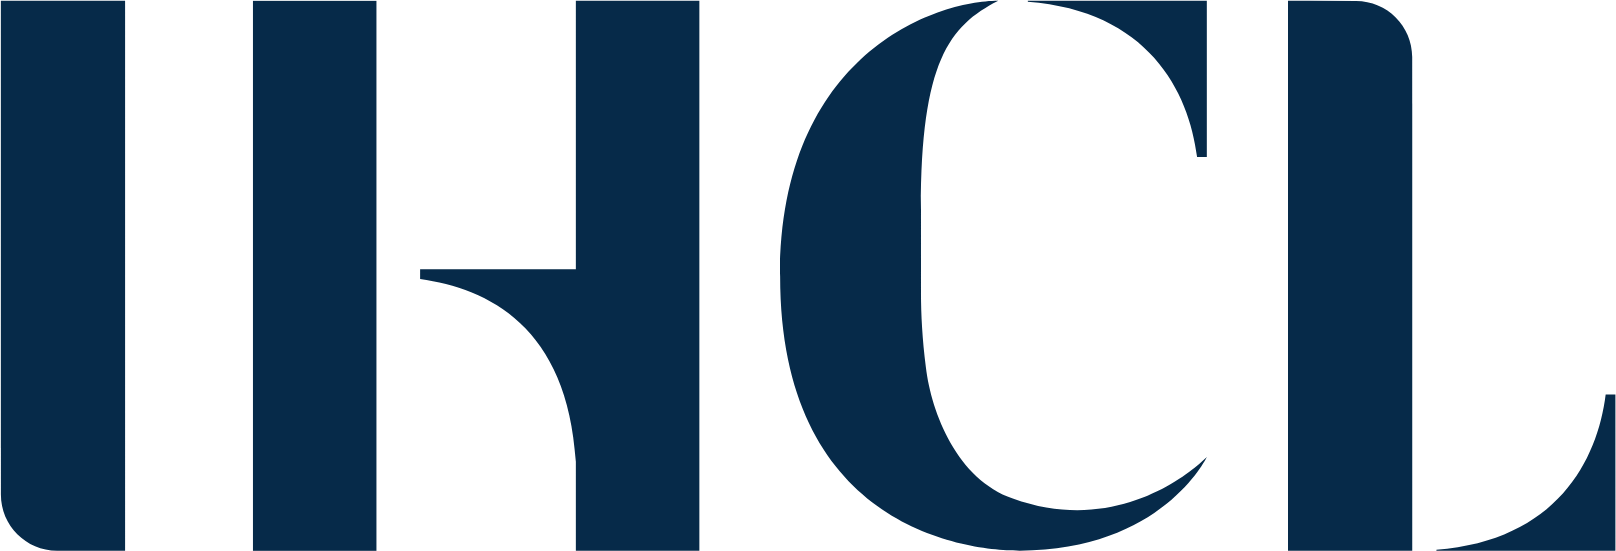 Indian Hotels Company logo (PNG transparent)